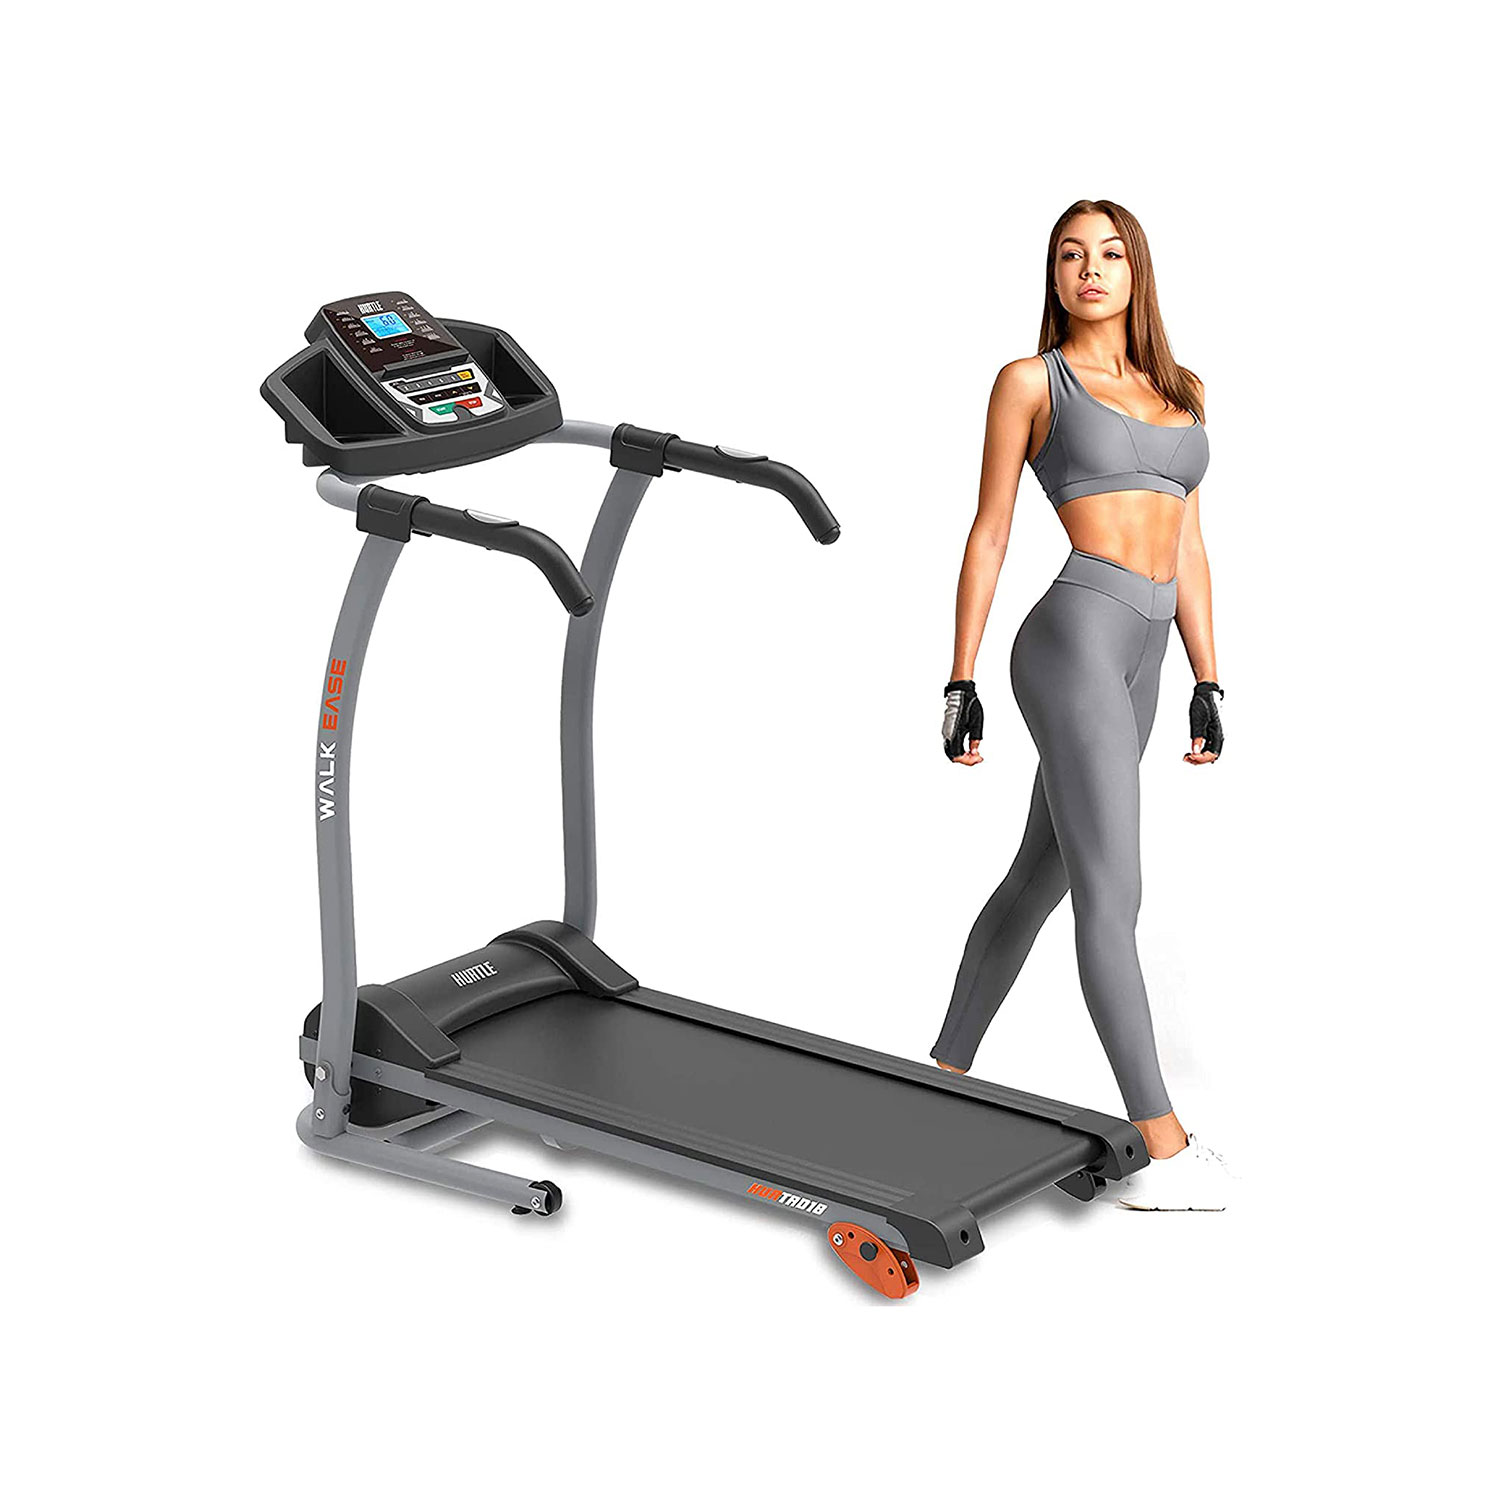 Hurtle Smart Portable Folding Digital Fitness Treadmill w/ Bluetooth, Black - image 1 of 7